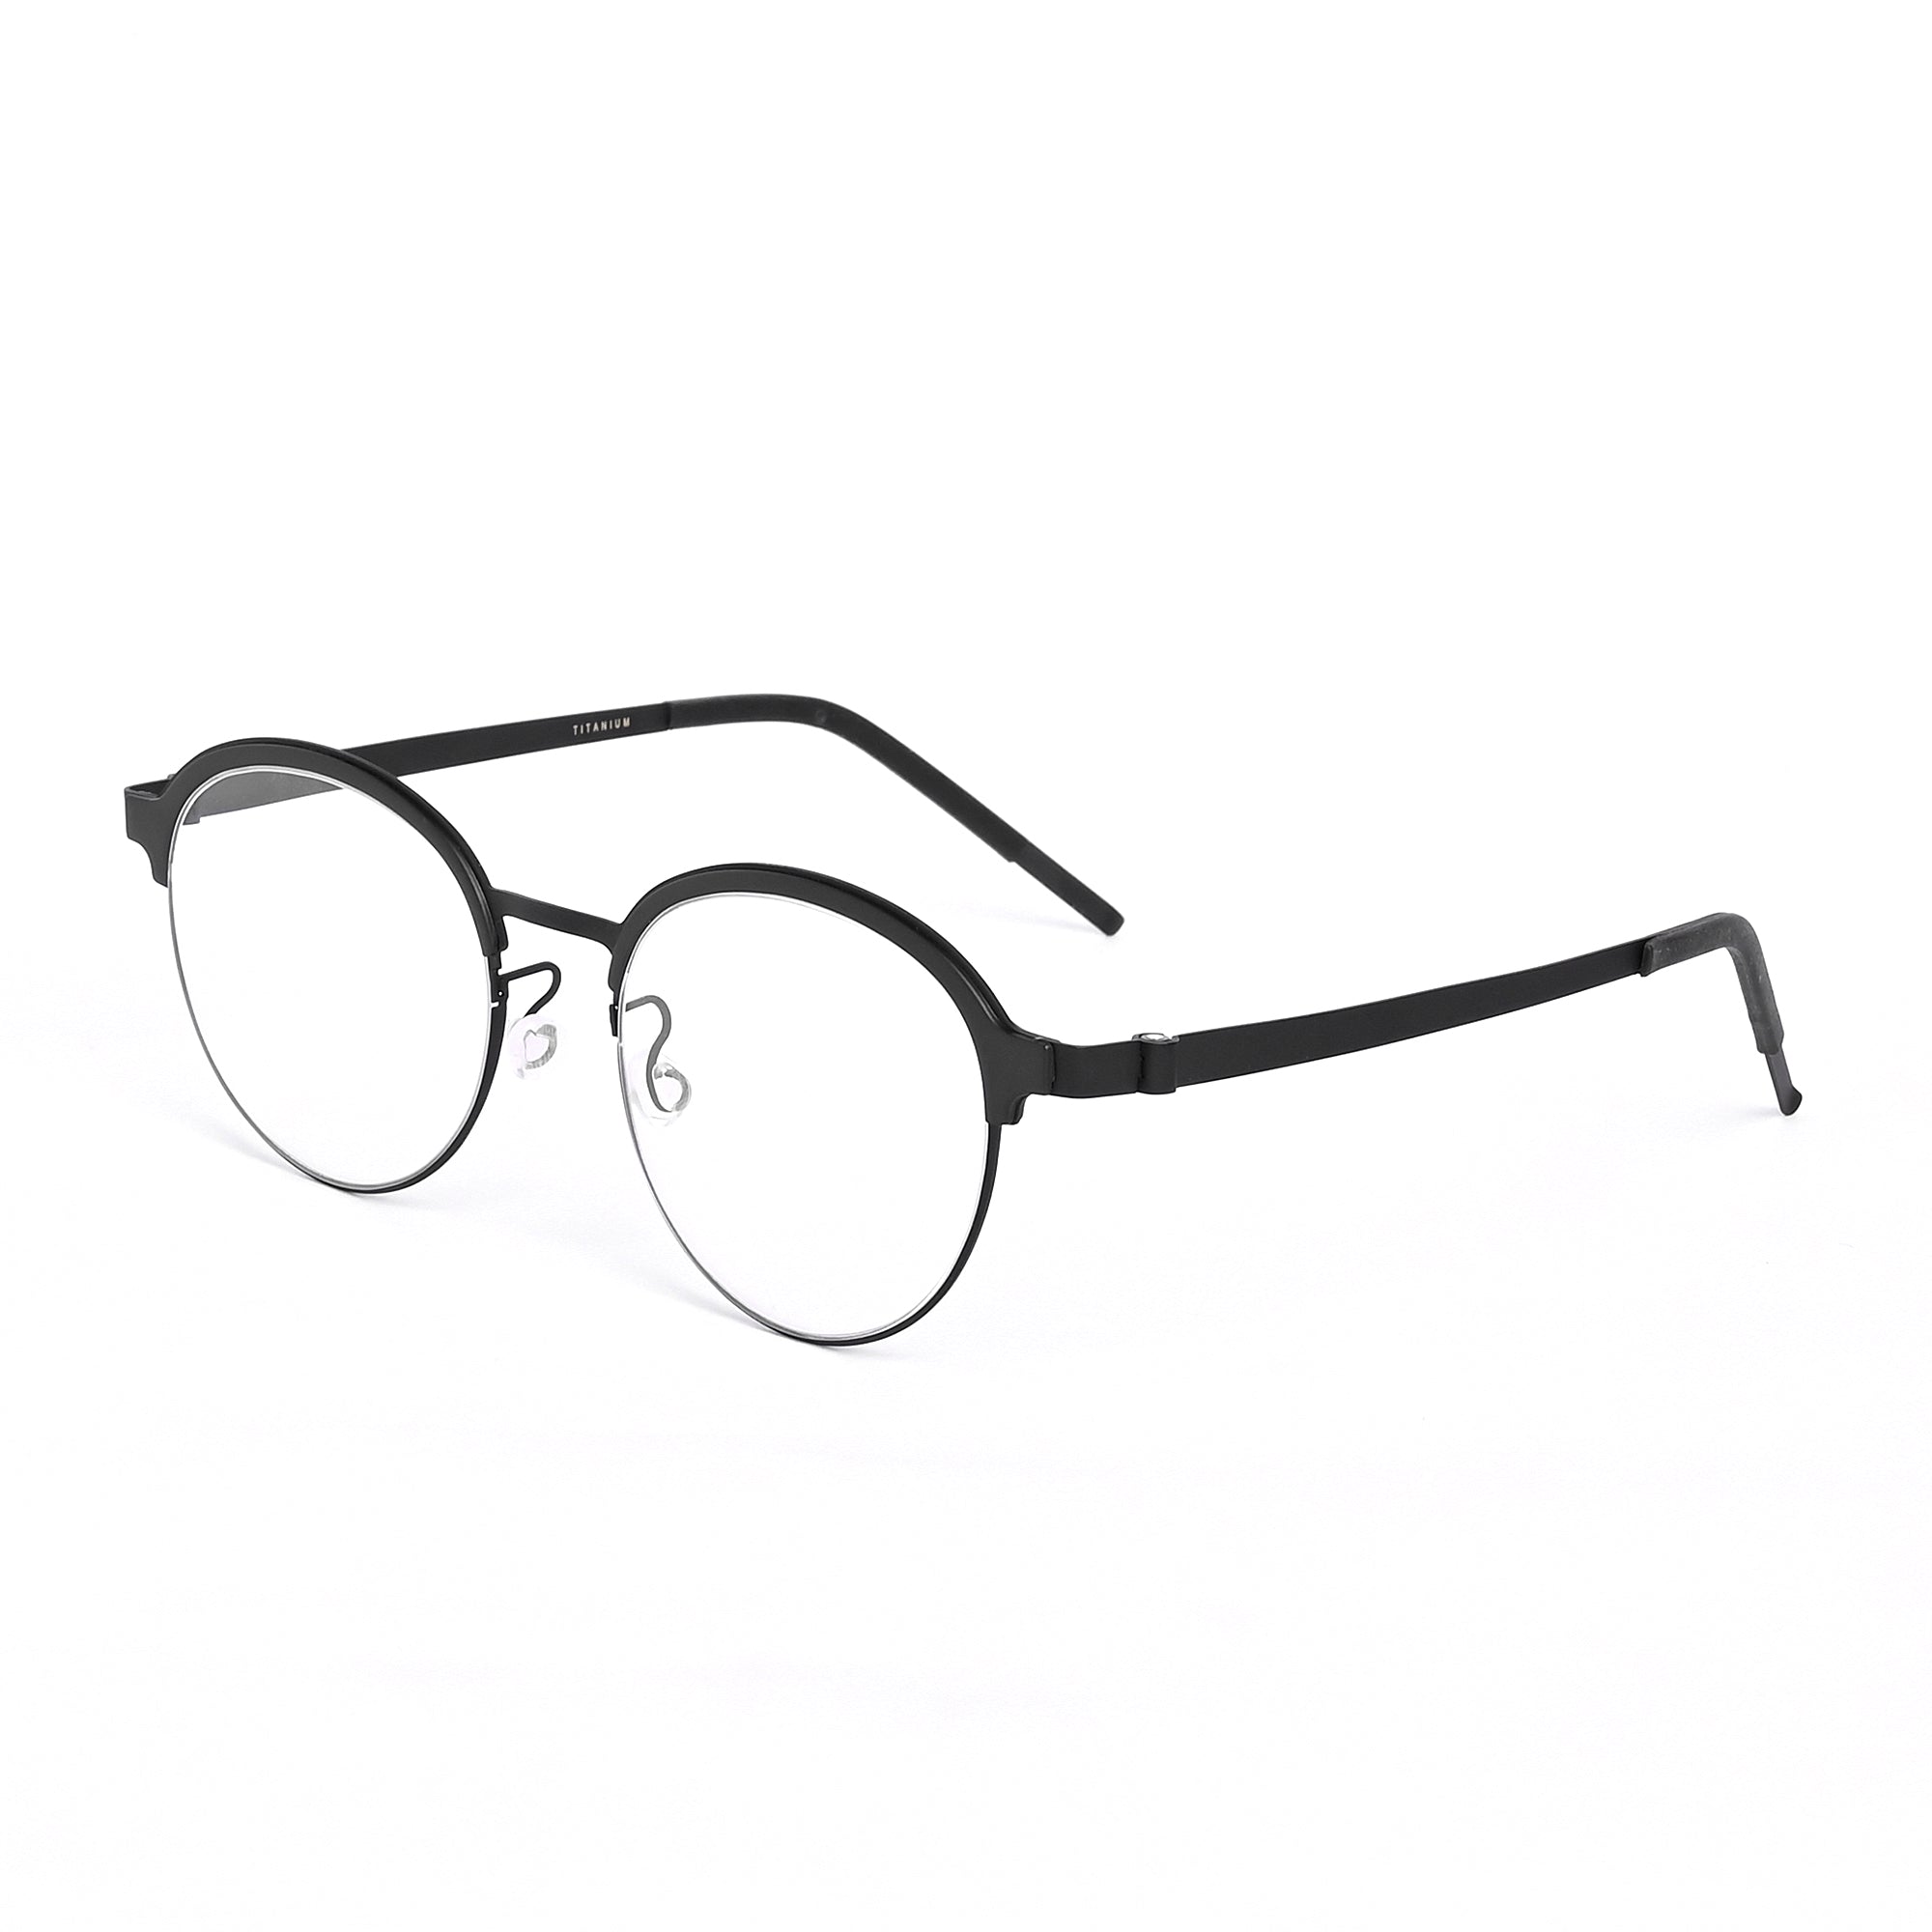 Black Round Keymount Titanium Eyeglasses - LG-004 BLK